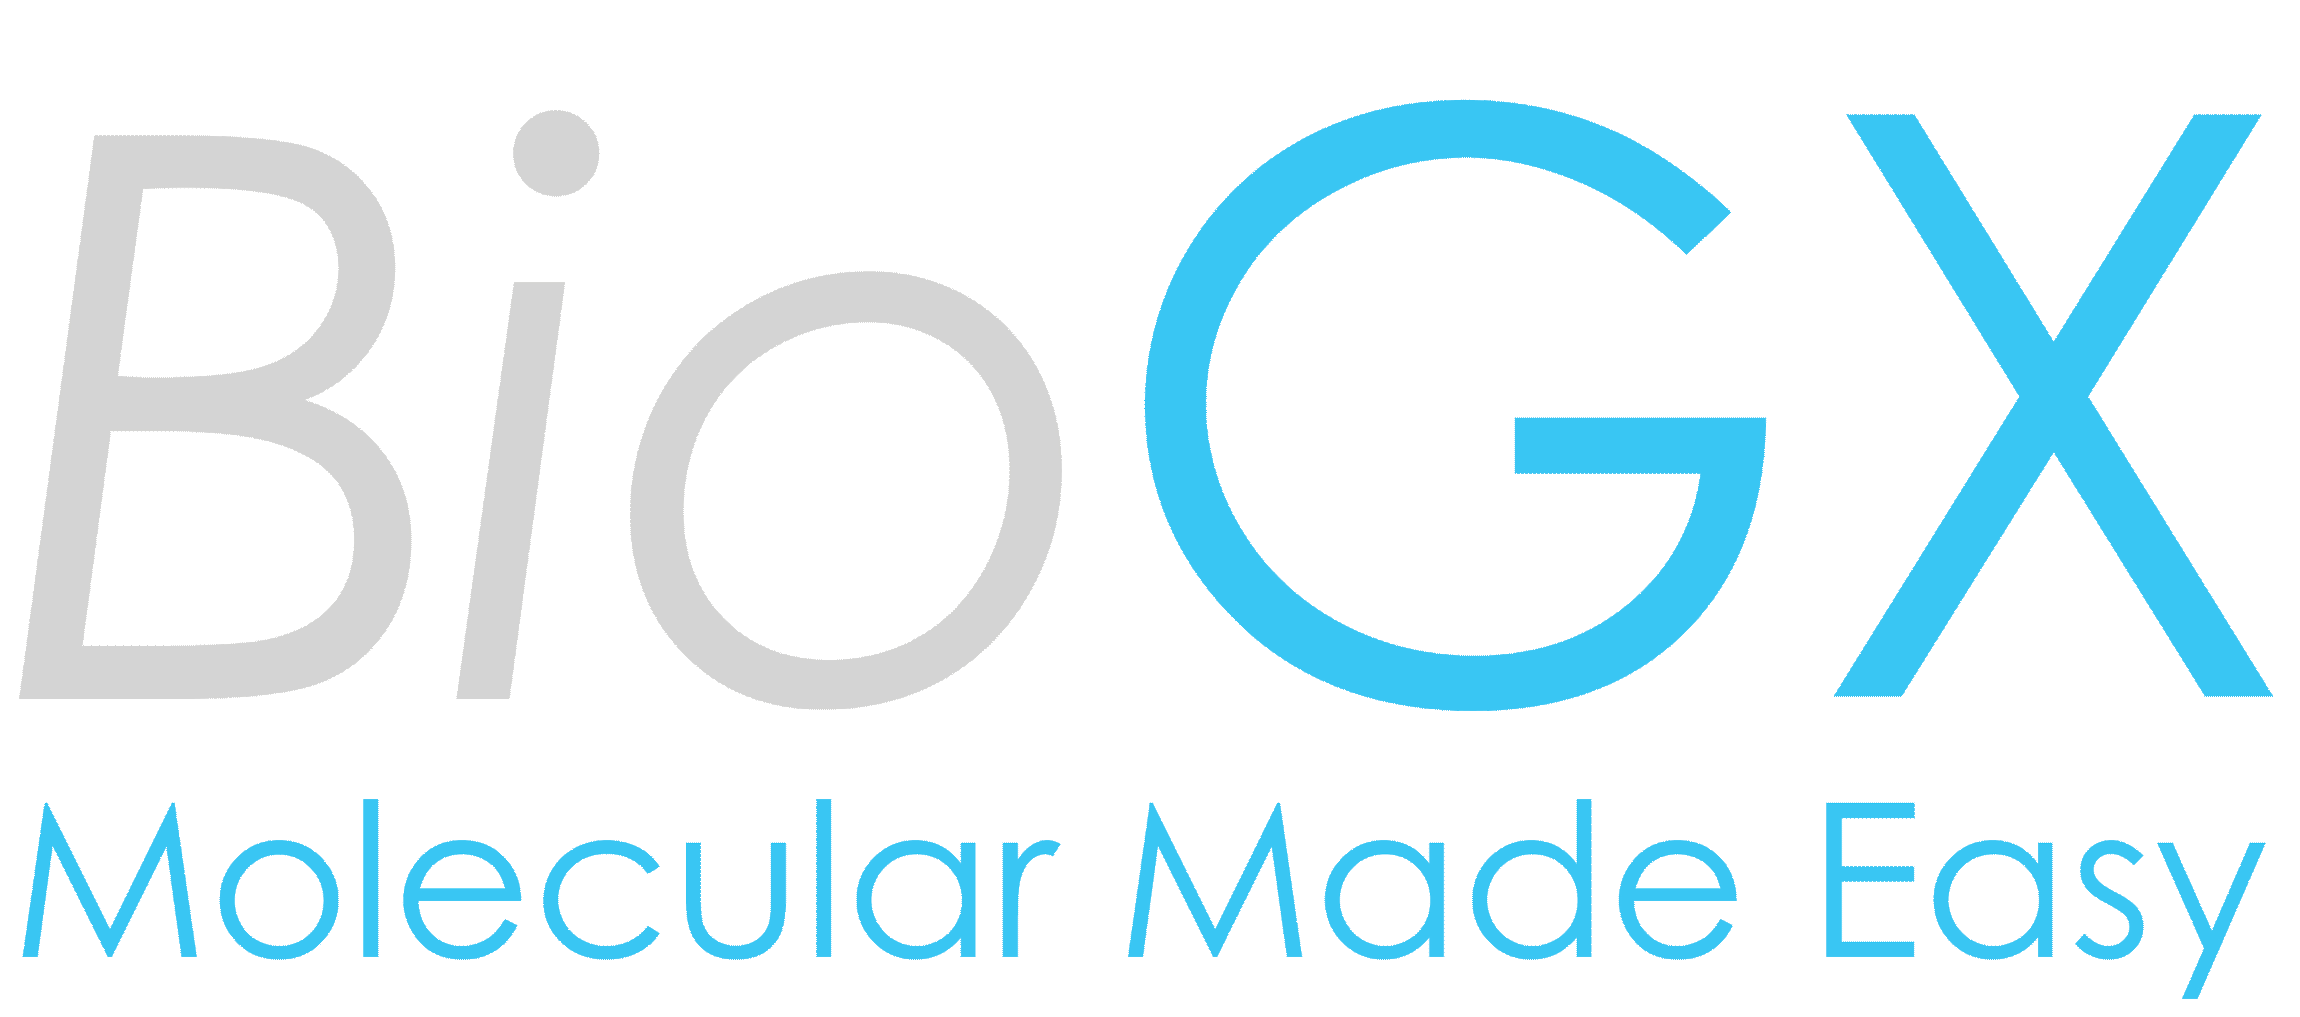 BioGX logo bez tla.png